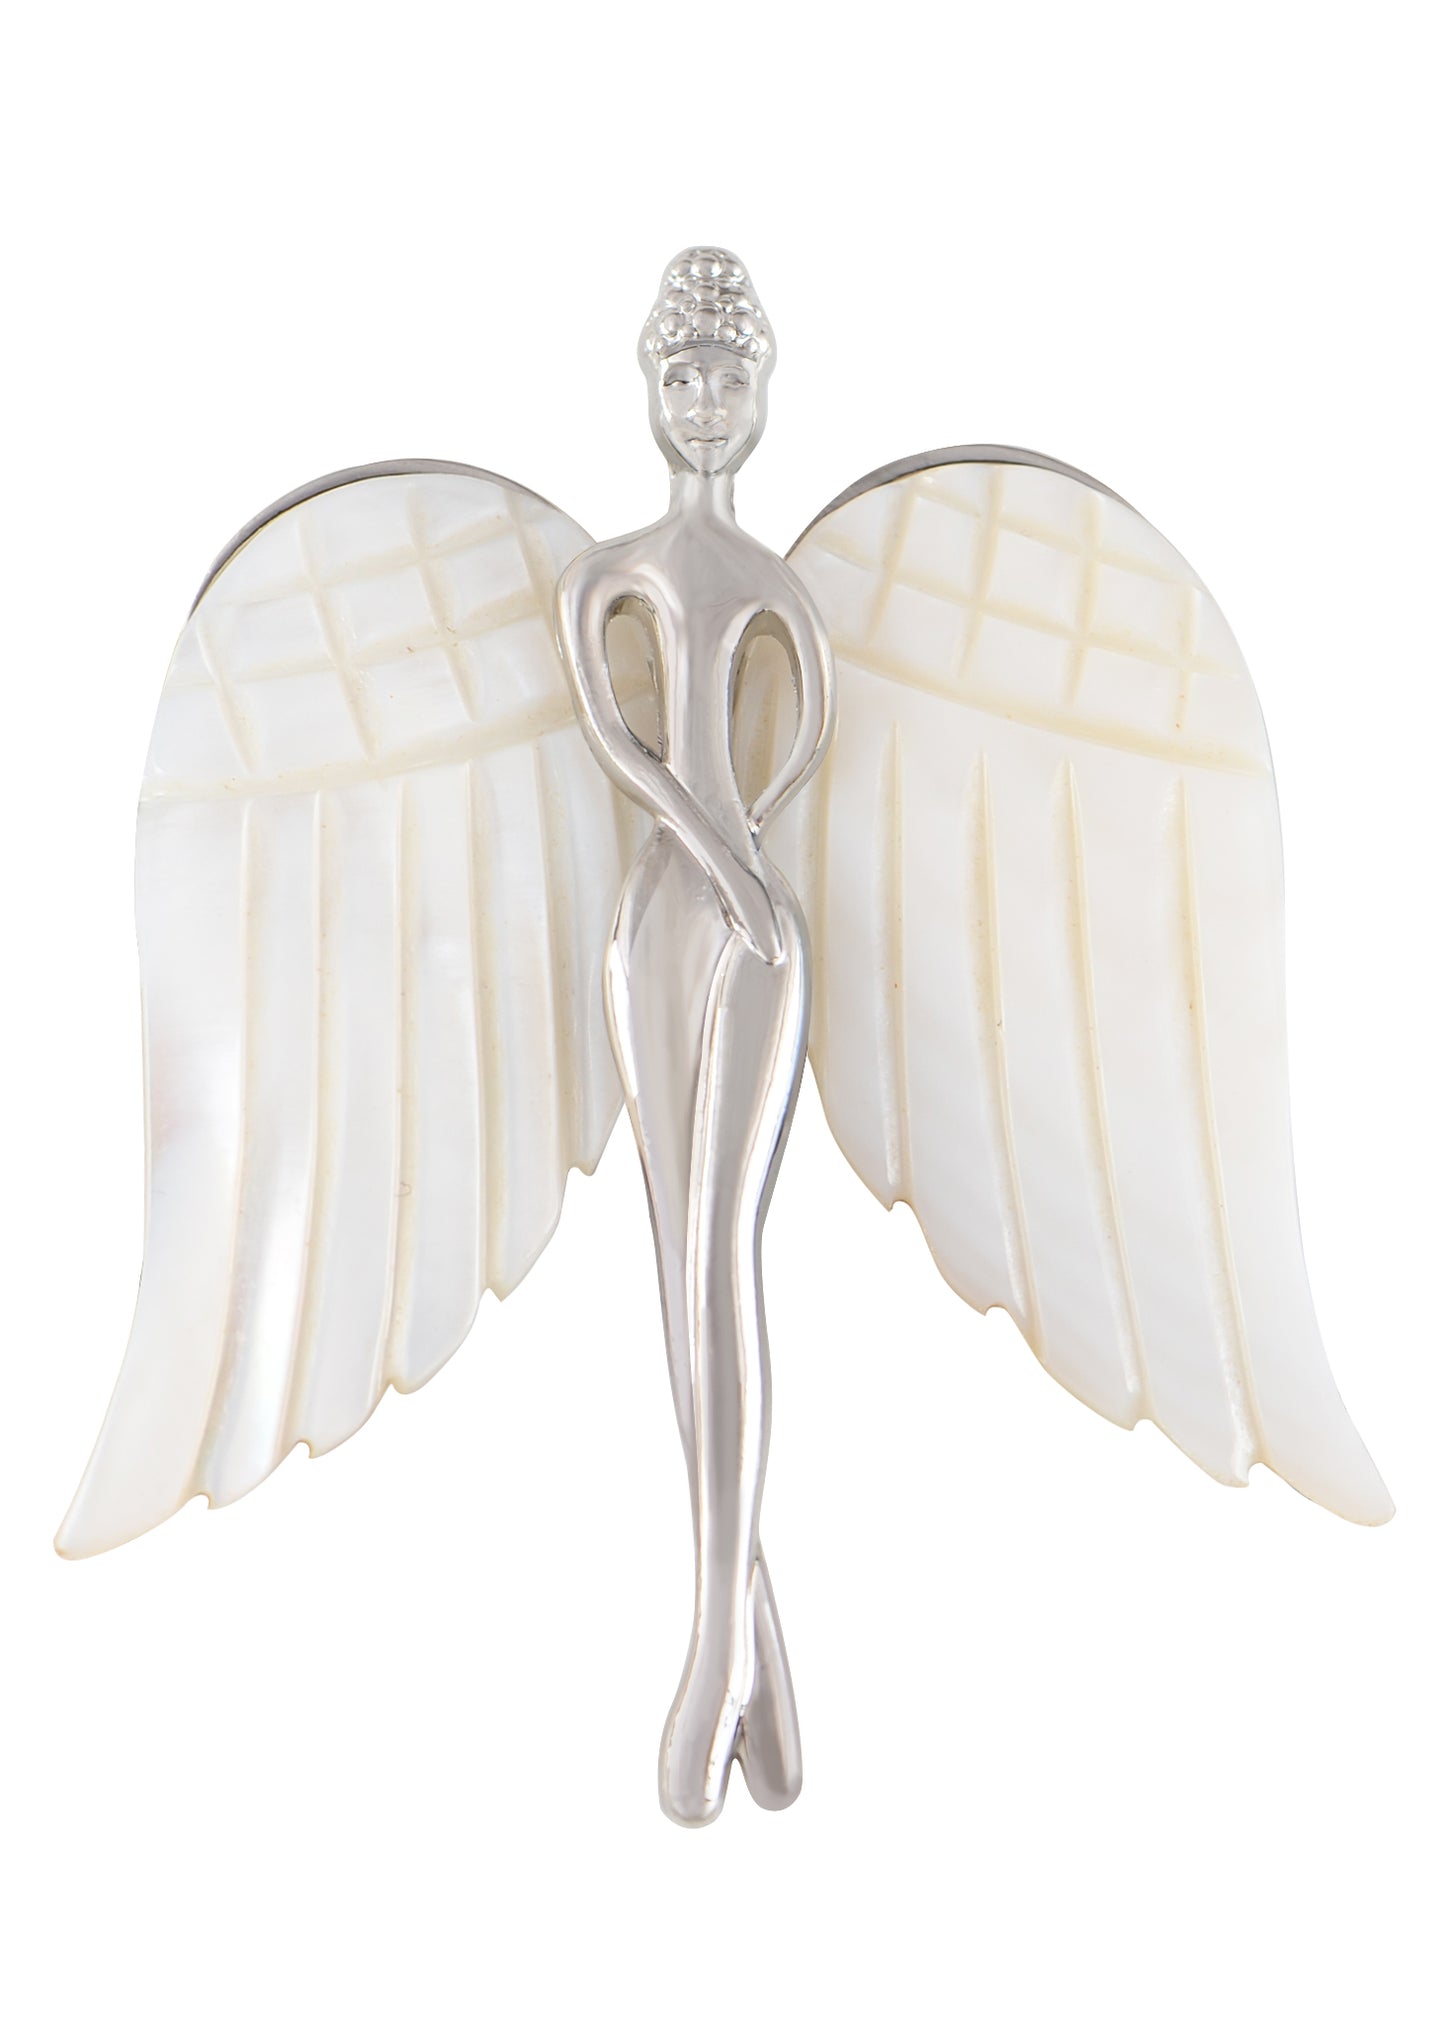 Alilang Vintage Silver Tone Abalone Shell Guardian Angel Brooch Pin & Pendant